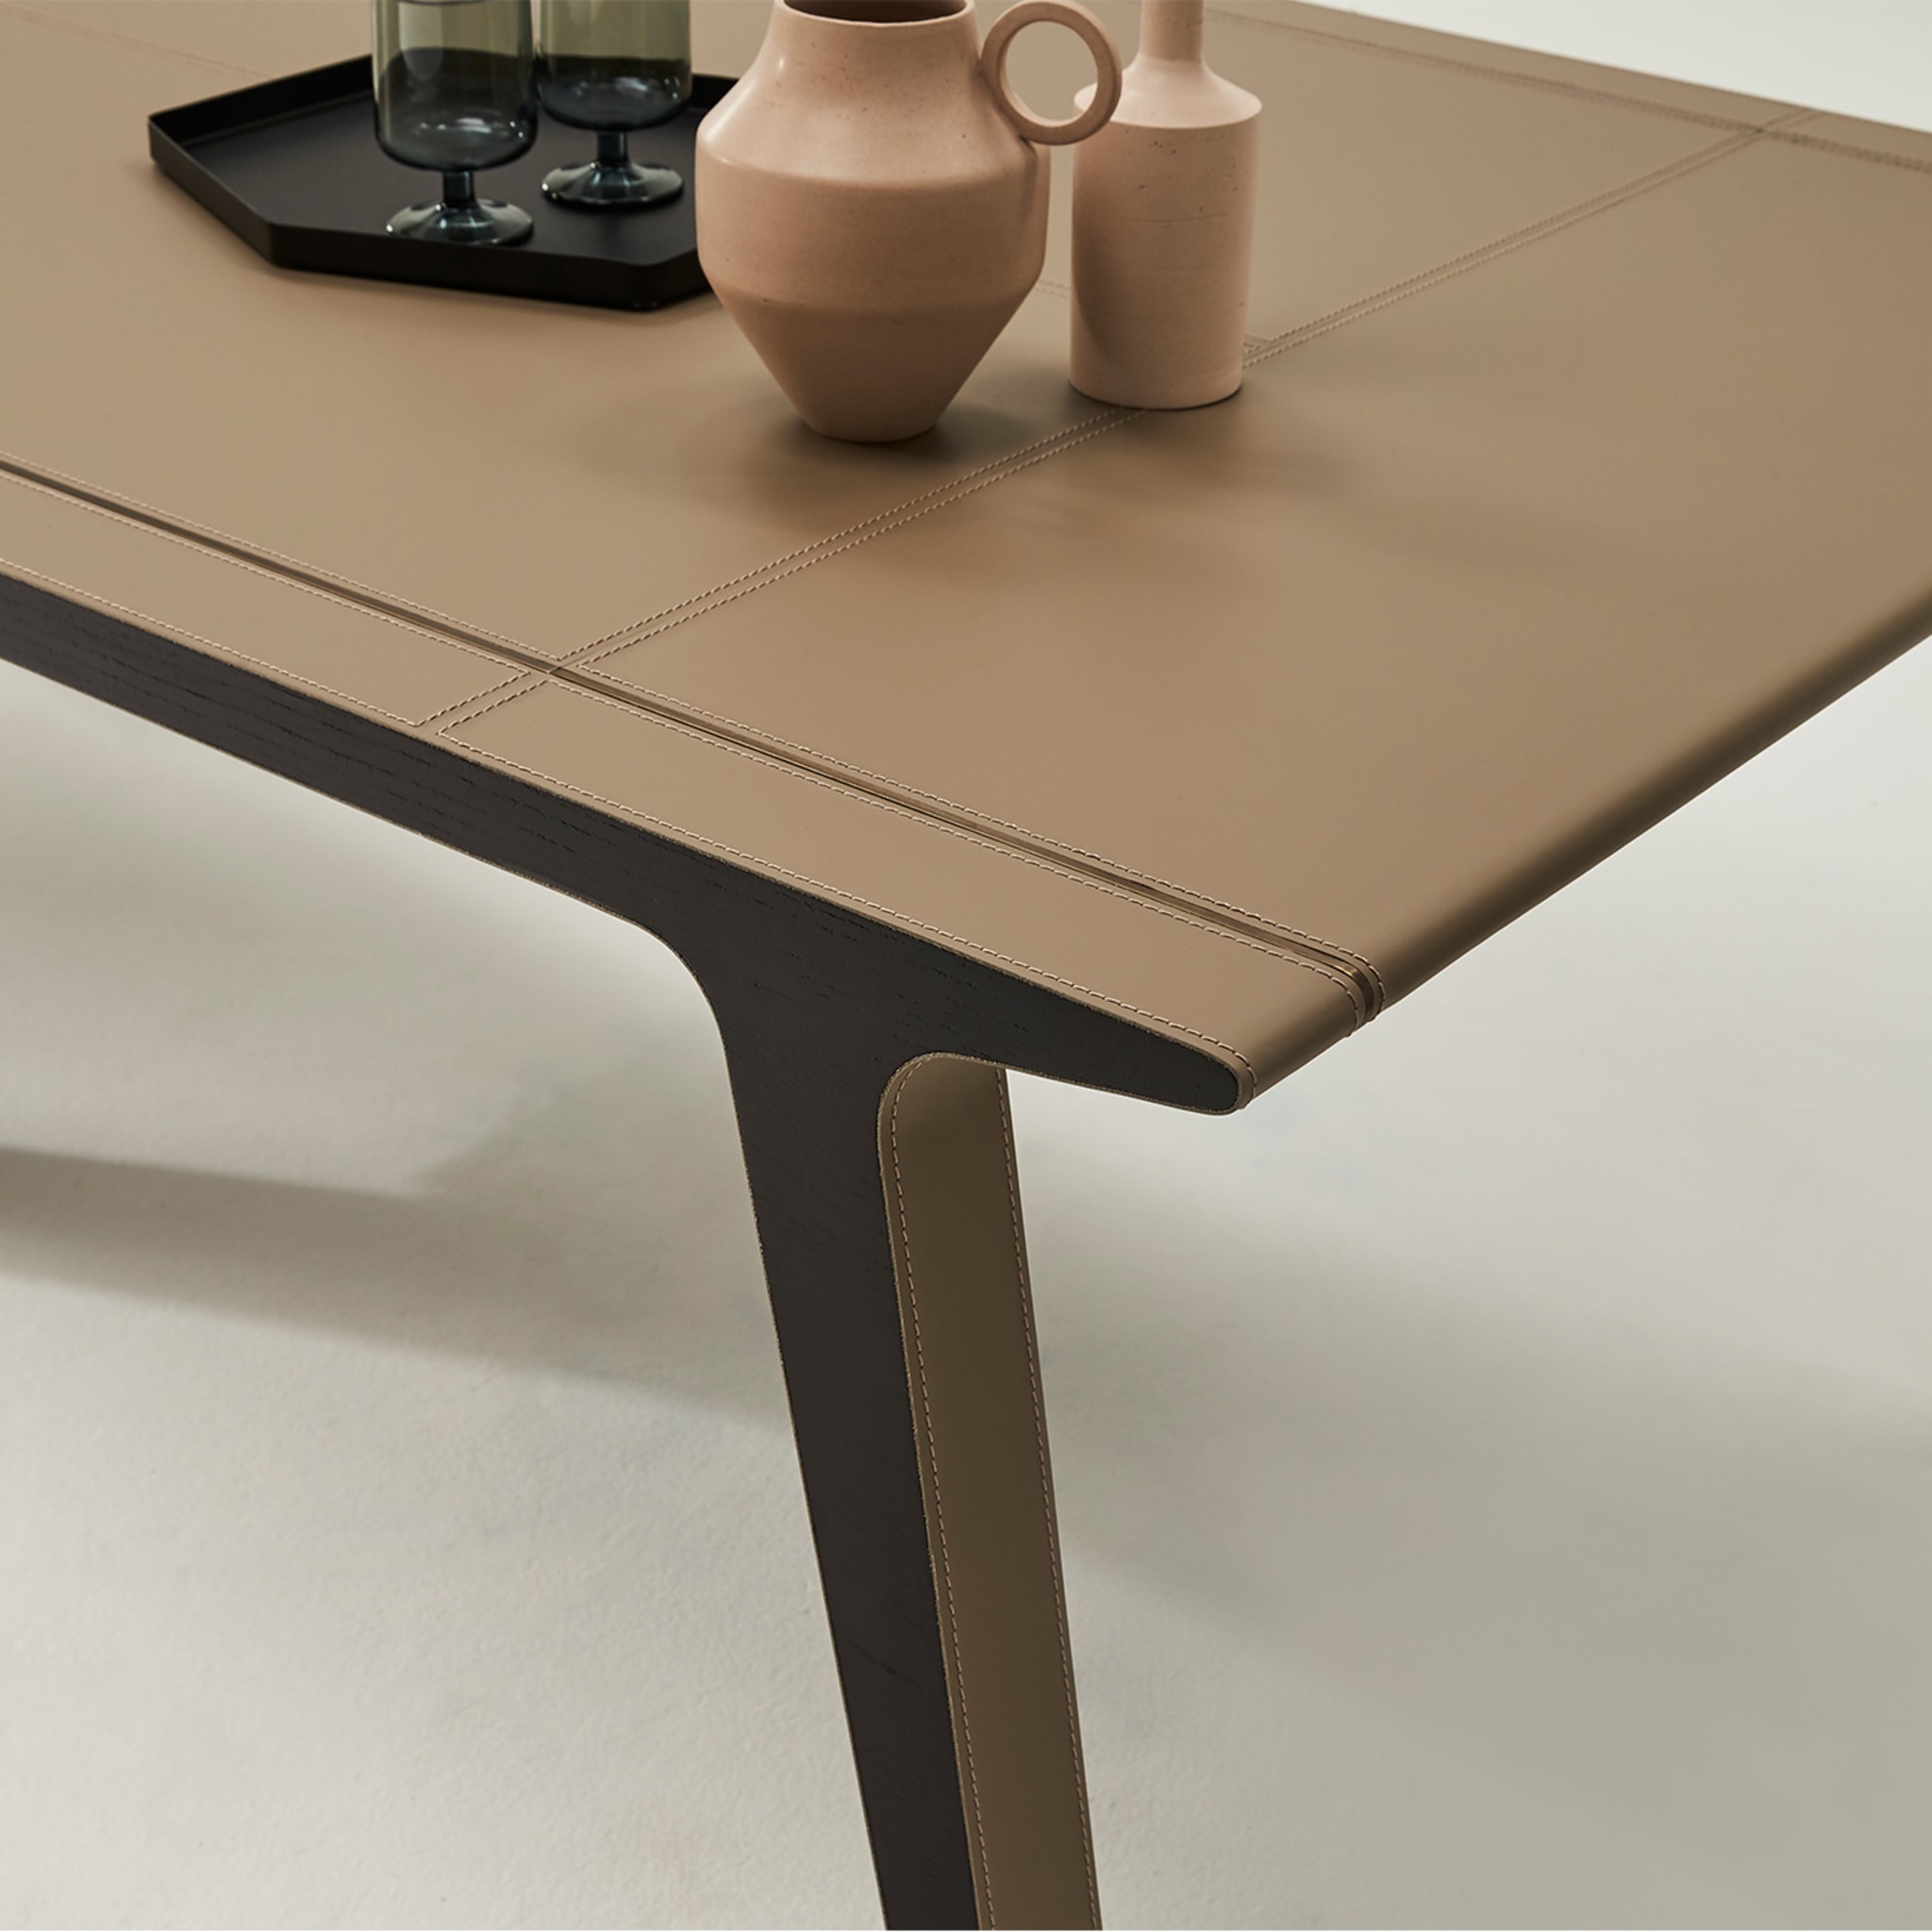 Laicon Taupe & Dark-Durmast Table by Nicola Romanelli - Alternative view 1